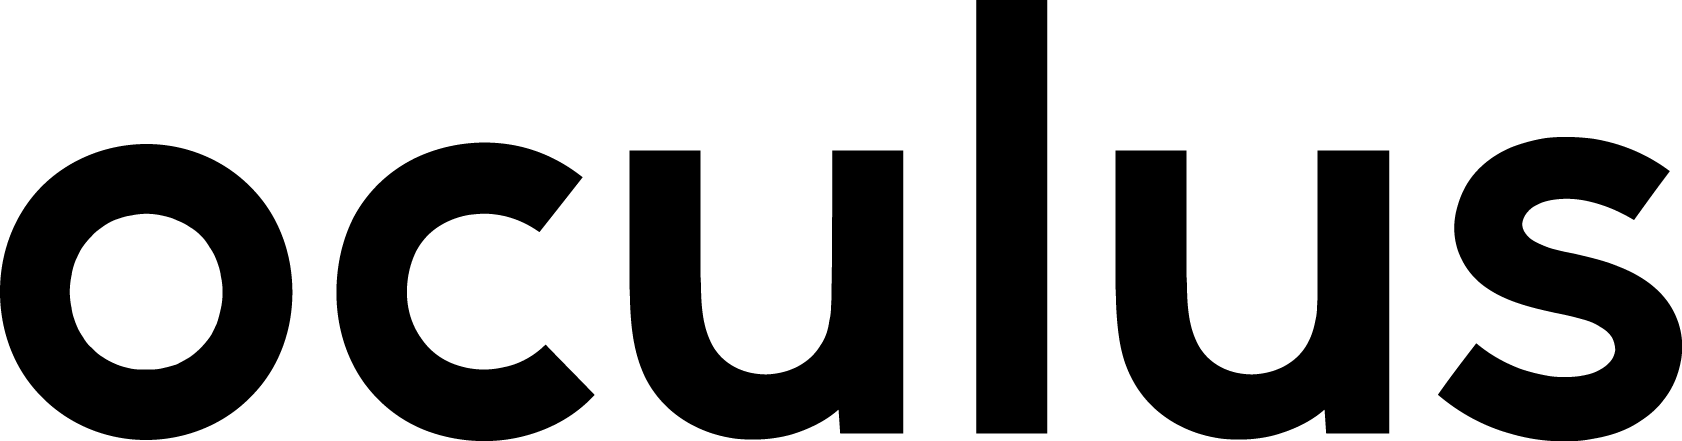 Oculus Logo [vr] - Oculus Rift Icon Png (1682x441), Png Download